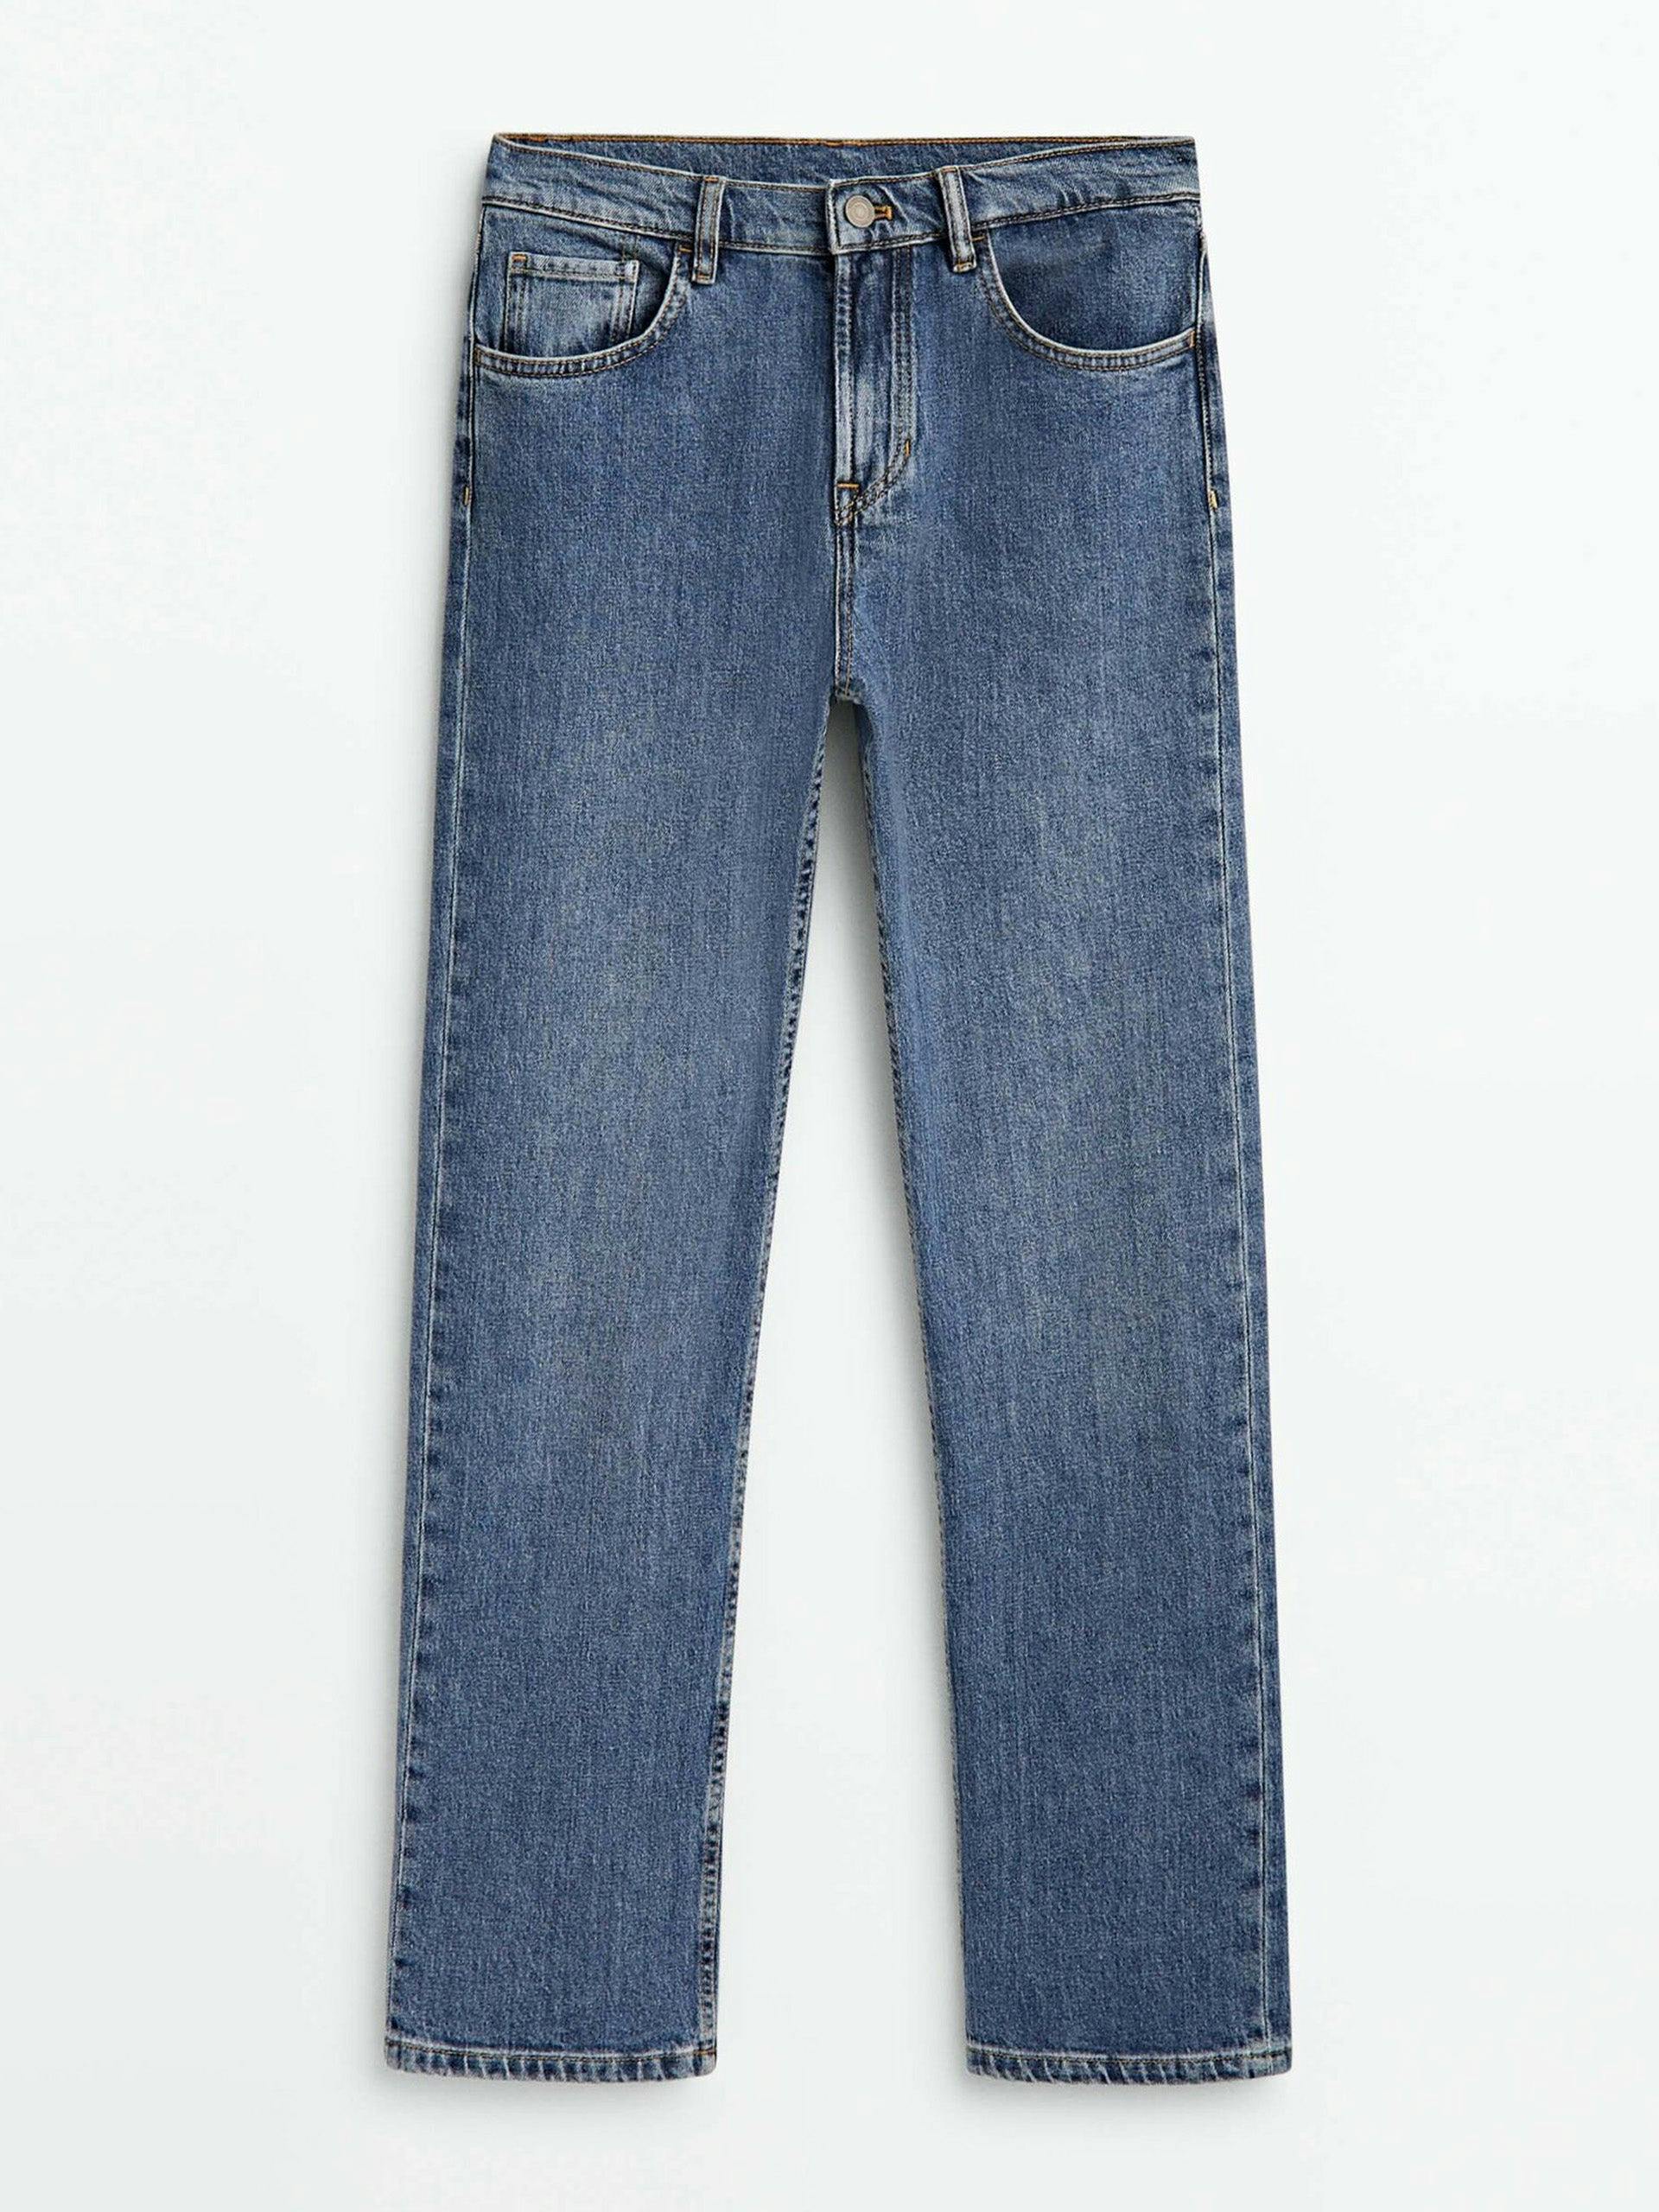 Straight mid-waist jeans